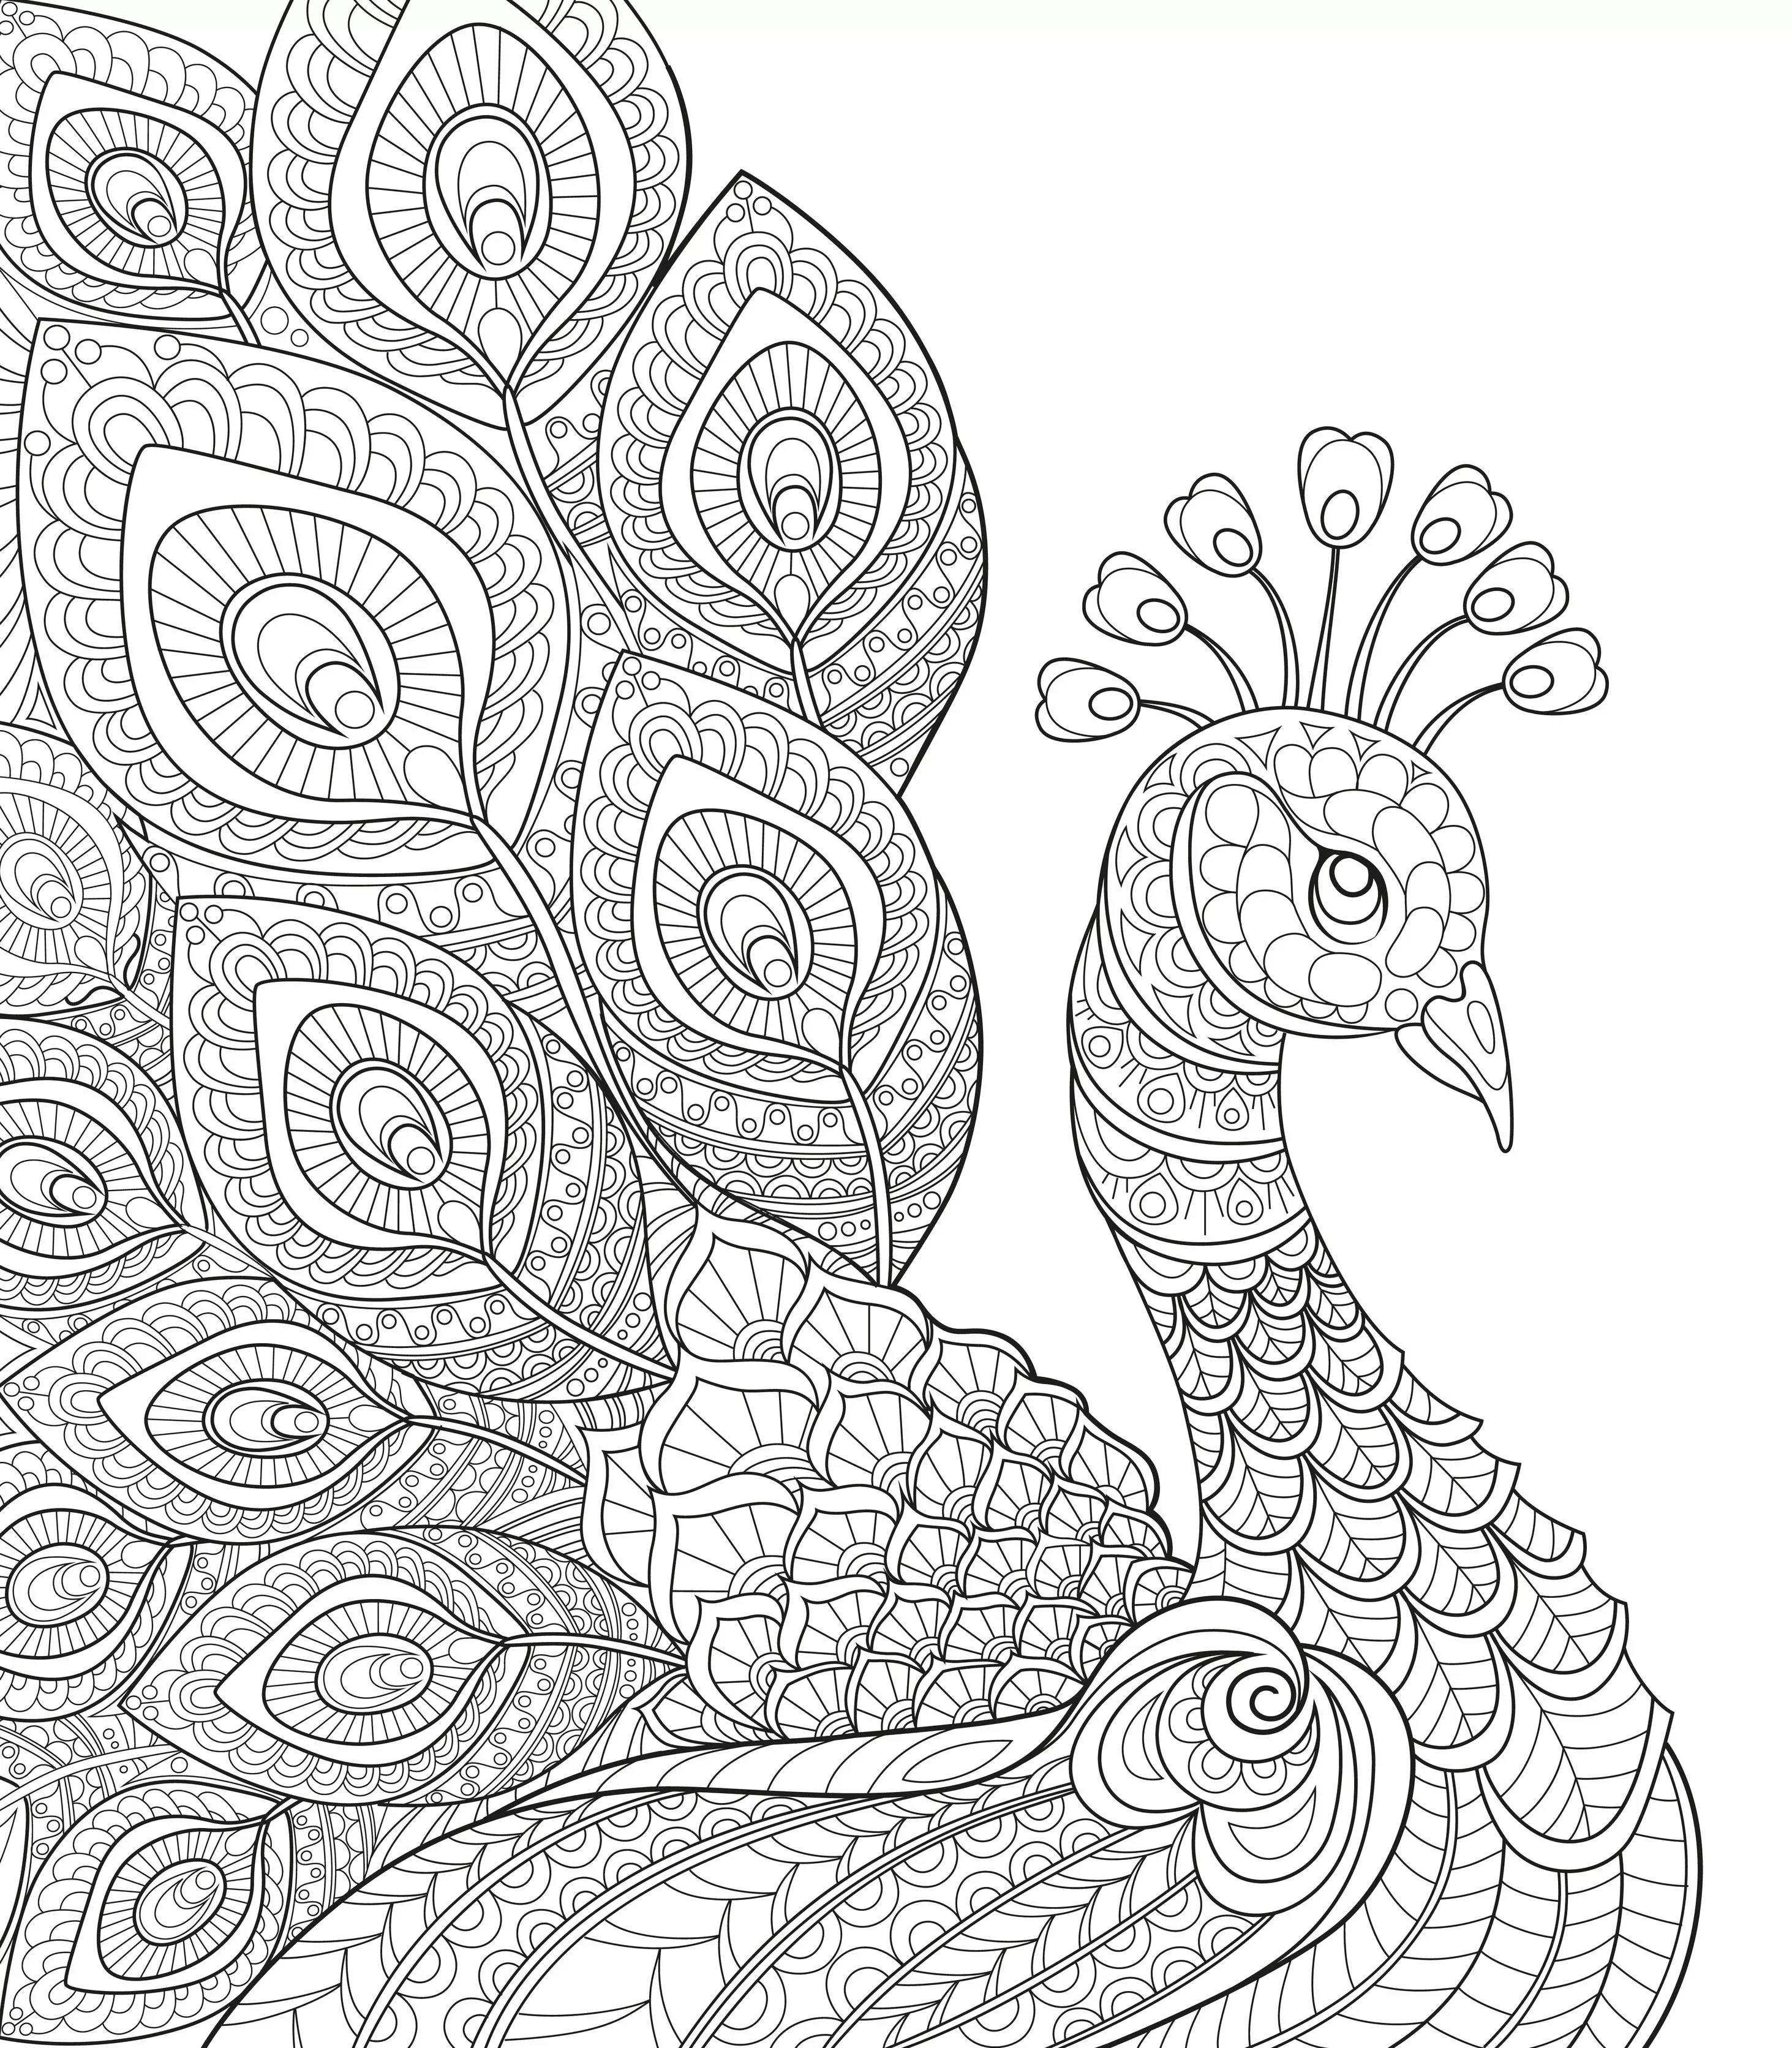 Displaying Peacock Coloring Page Jpg Mandala Kleurplaten Dieren Kleurplaten Boek Blad